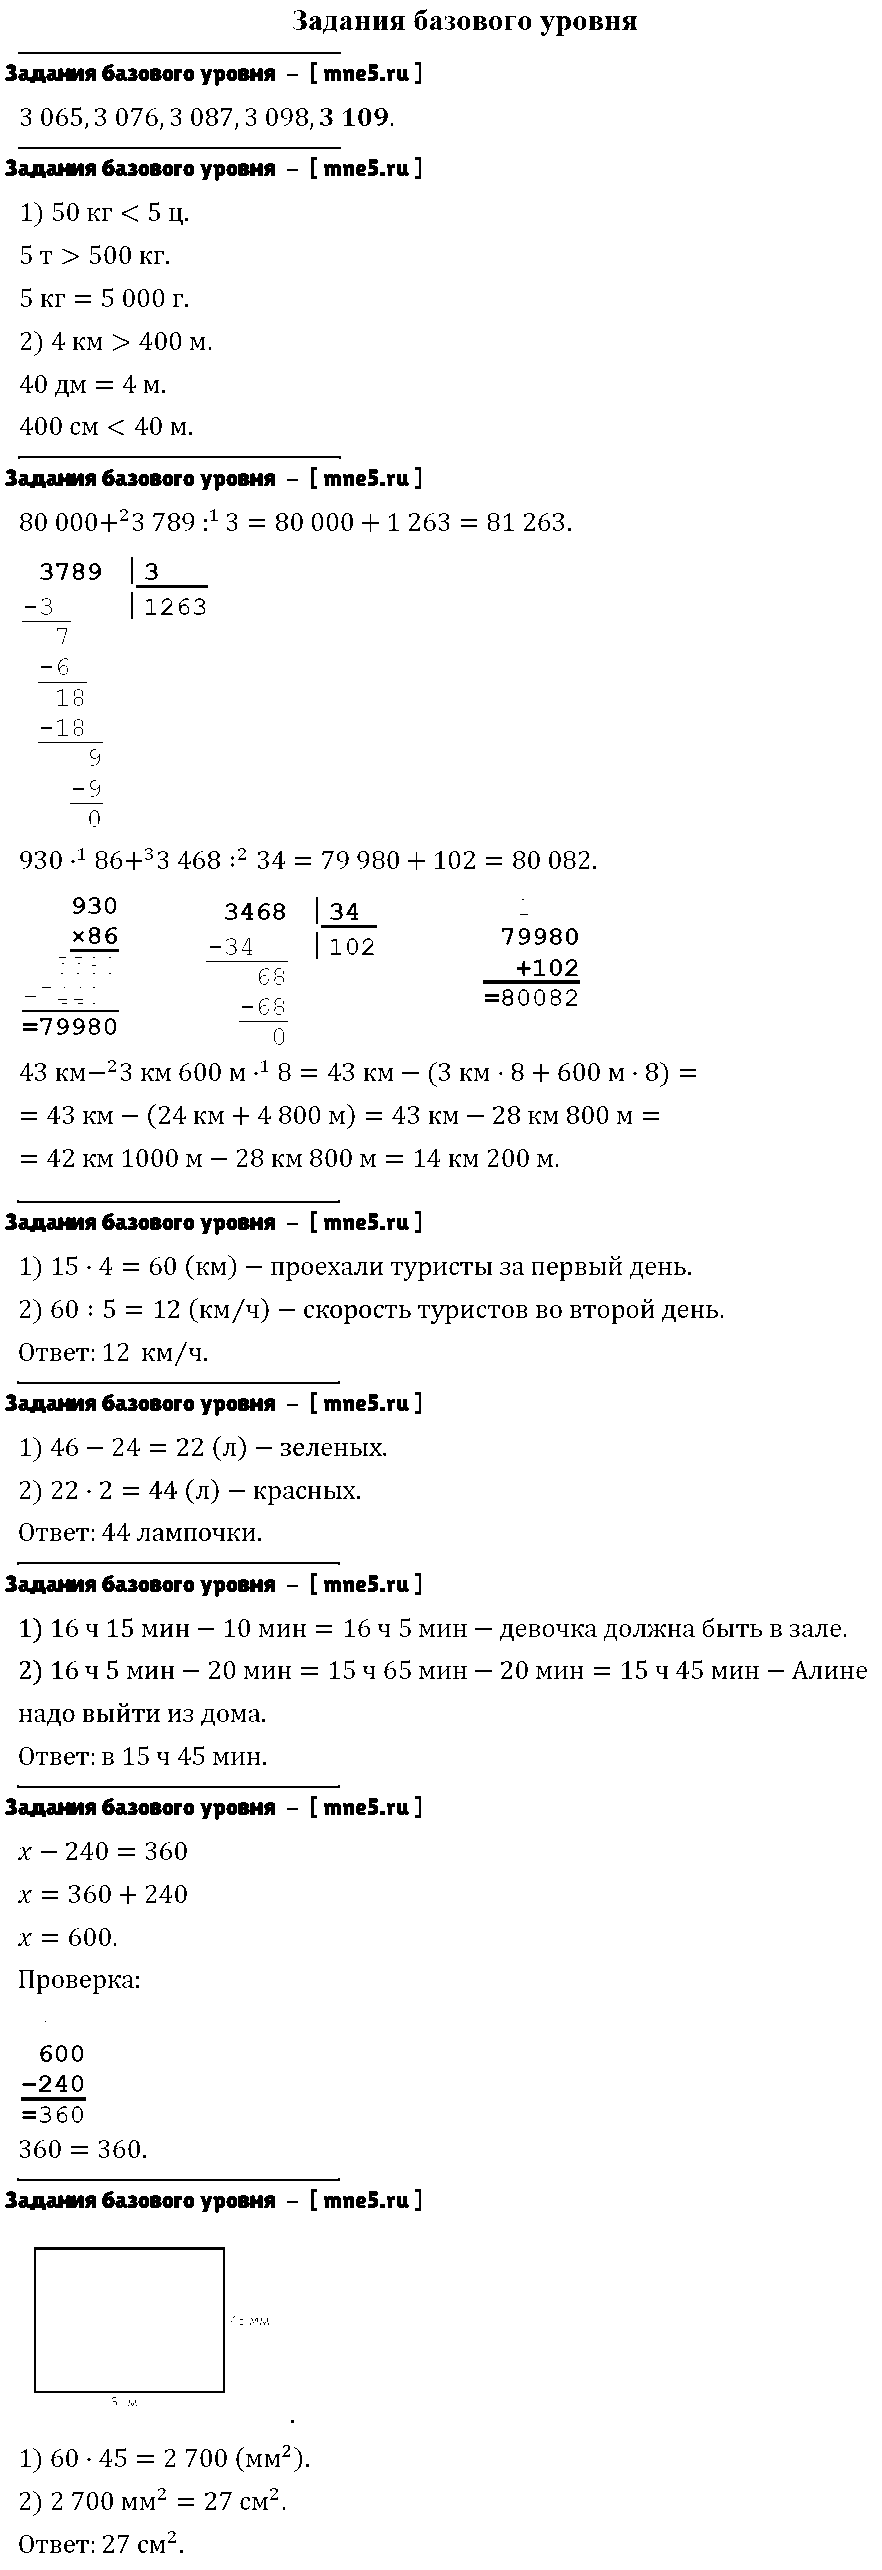 ГДЗ Математика 4 класс - Задания базового уровня